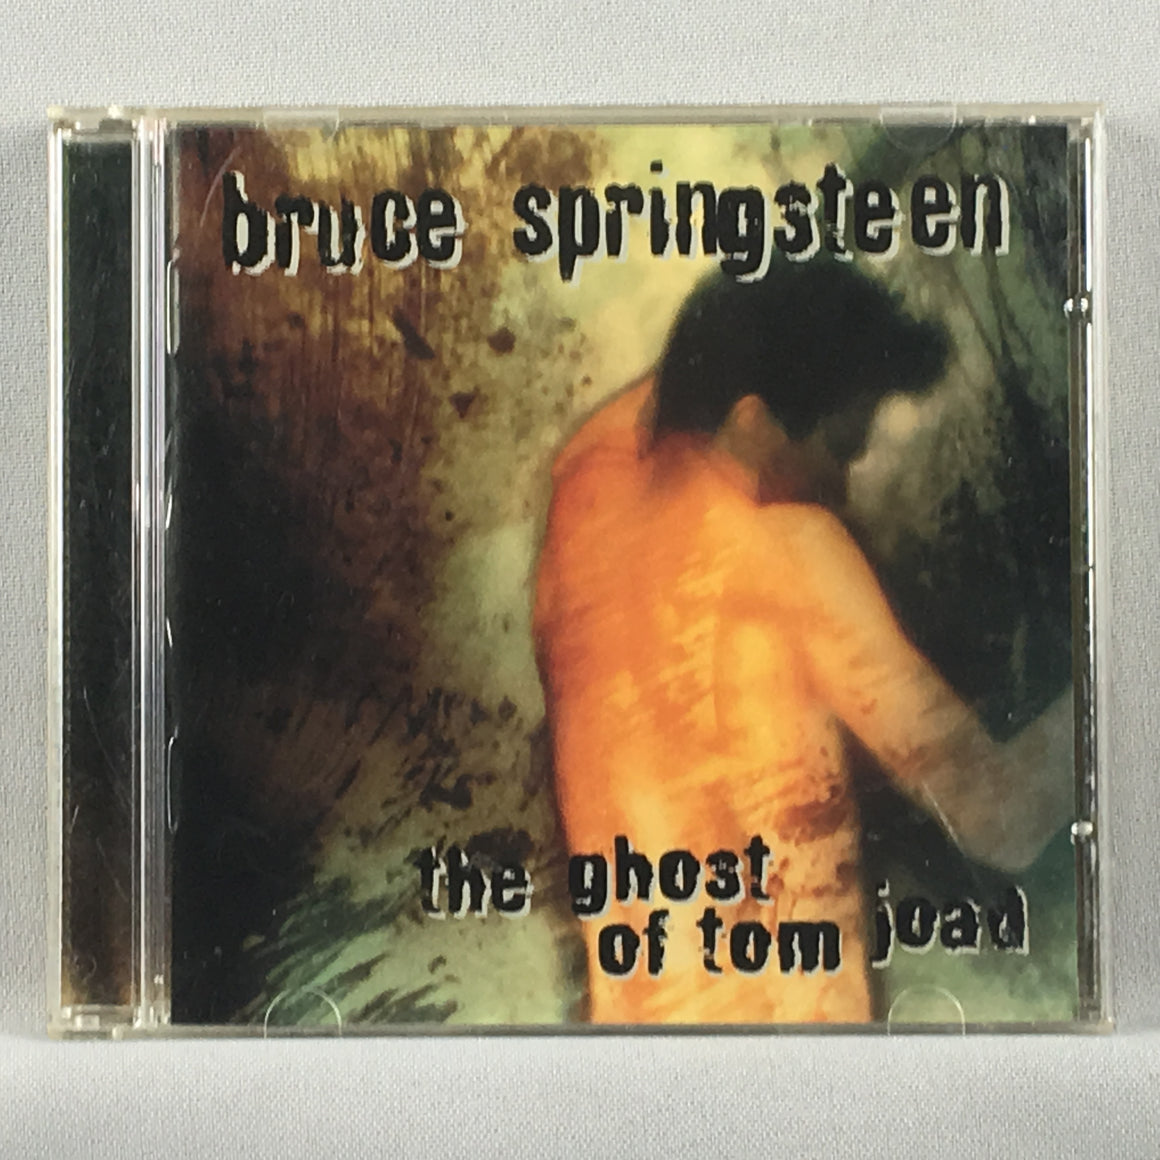 Bruce Springsteen ‎– The Ghost Of Tom Joad - Orig Press Used CD VG+ CK 67484